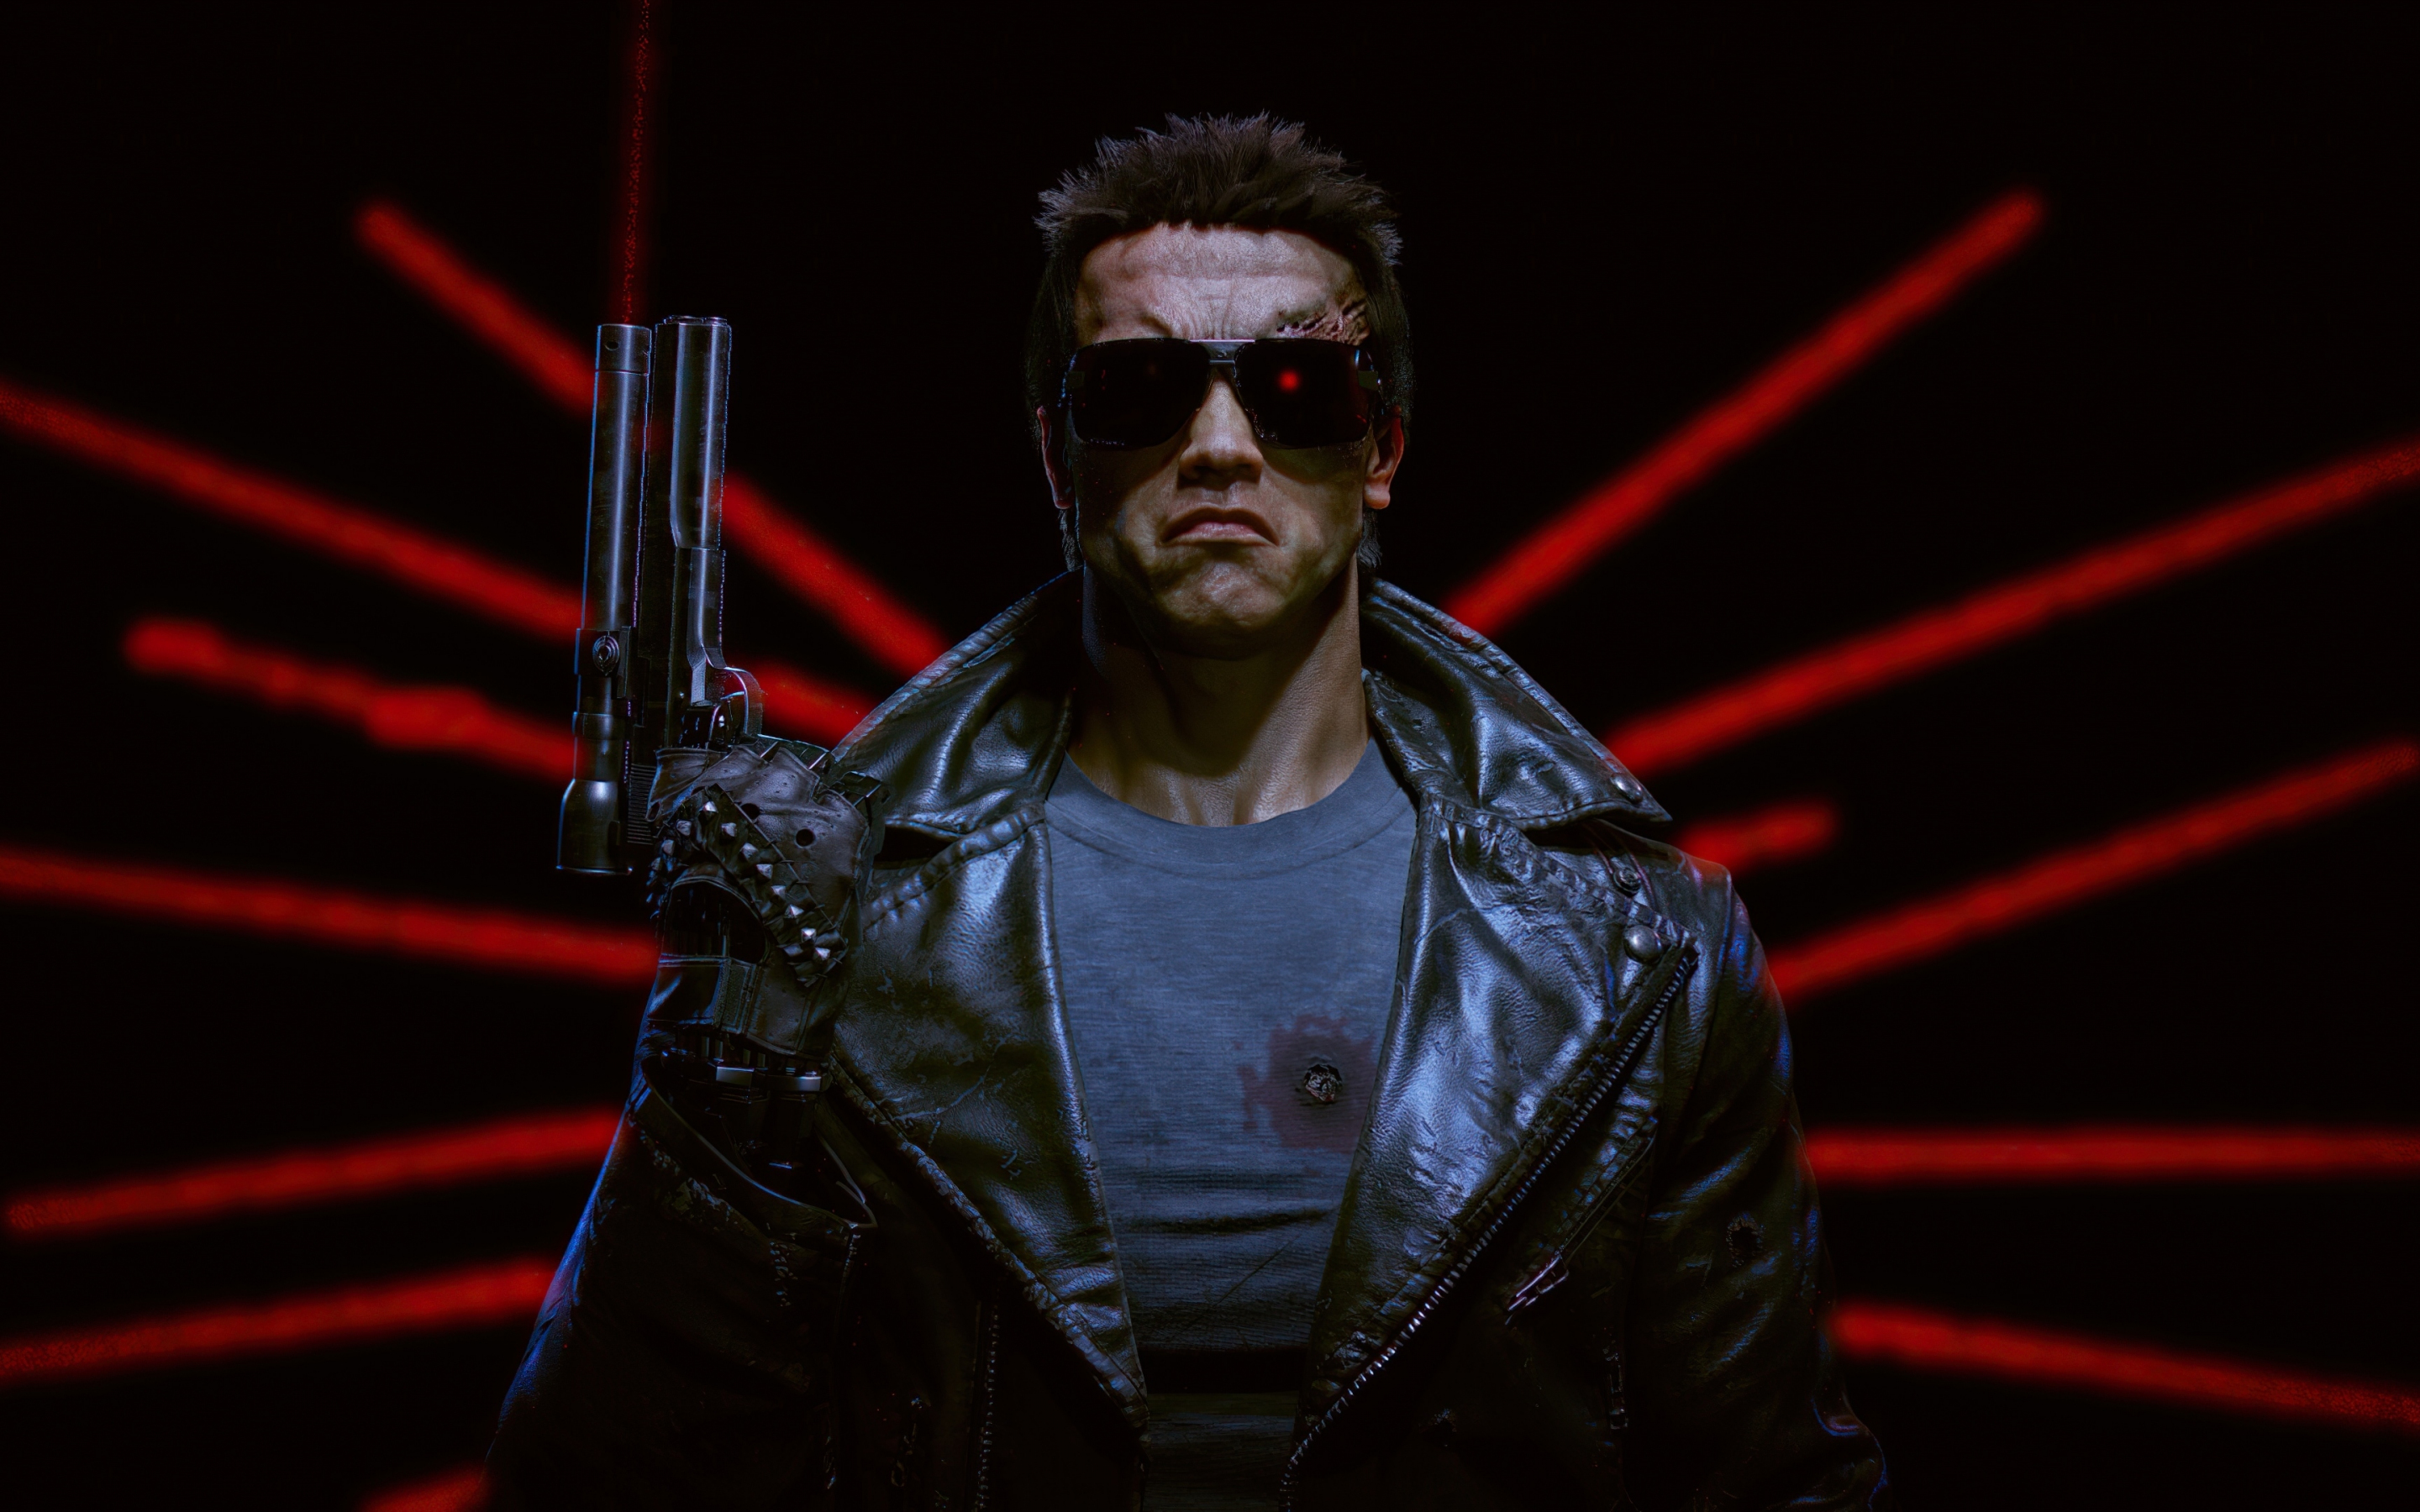 The Terminator, Arnold, fan art, 2880x1800 wallpaper